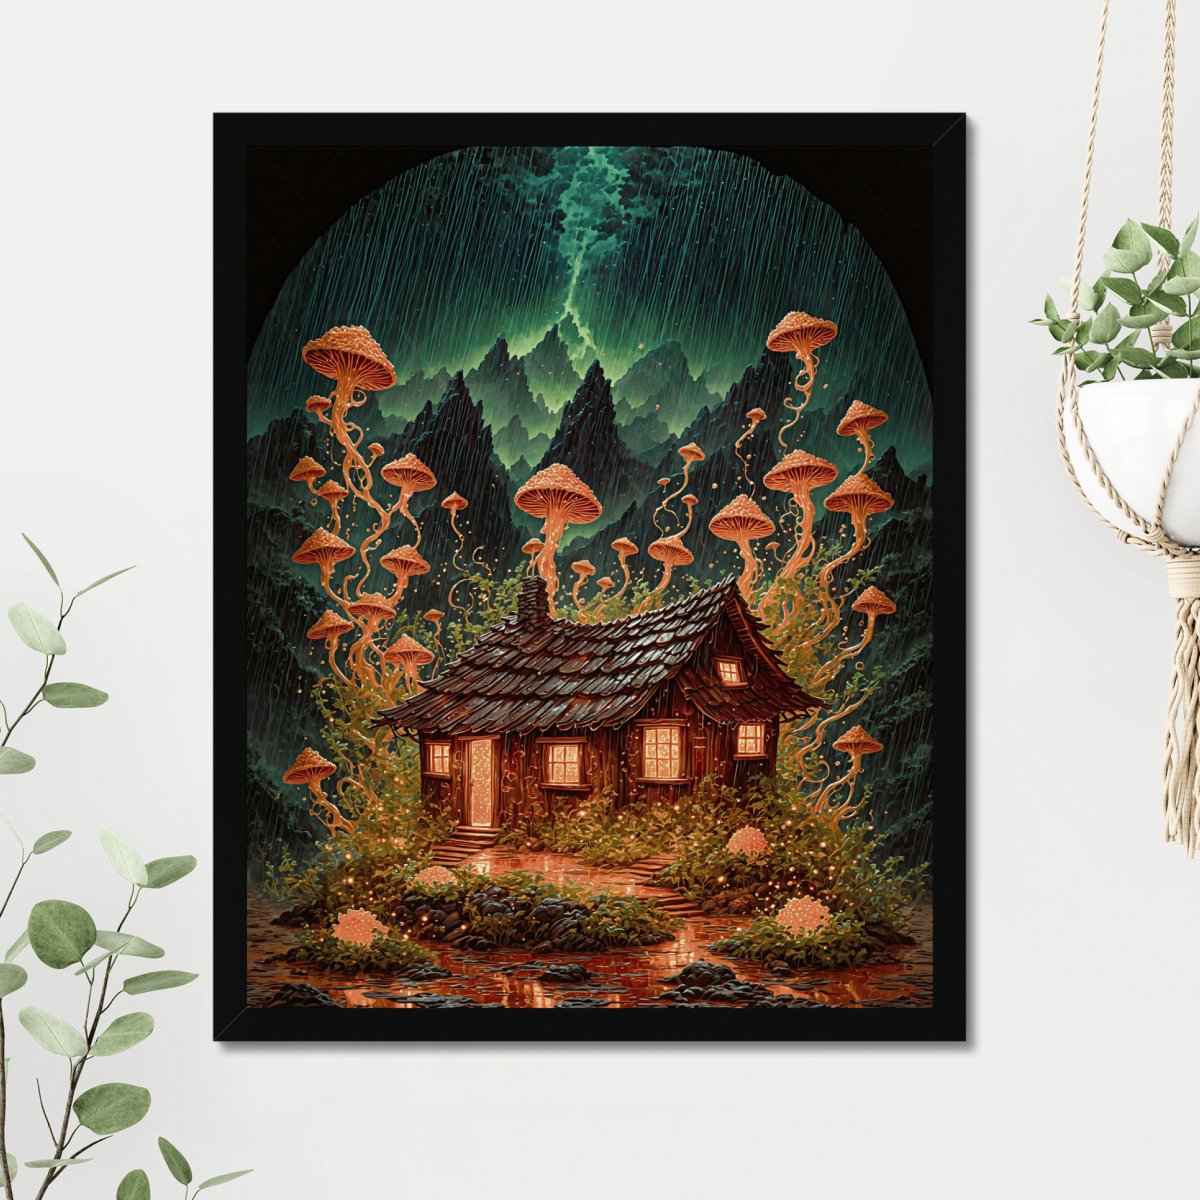 Mushroom thunderstorm - Art print - Poster - Ever colorful